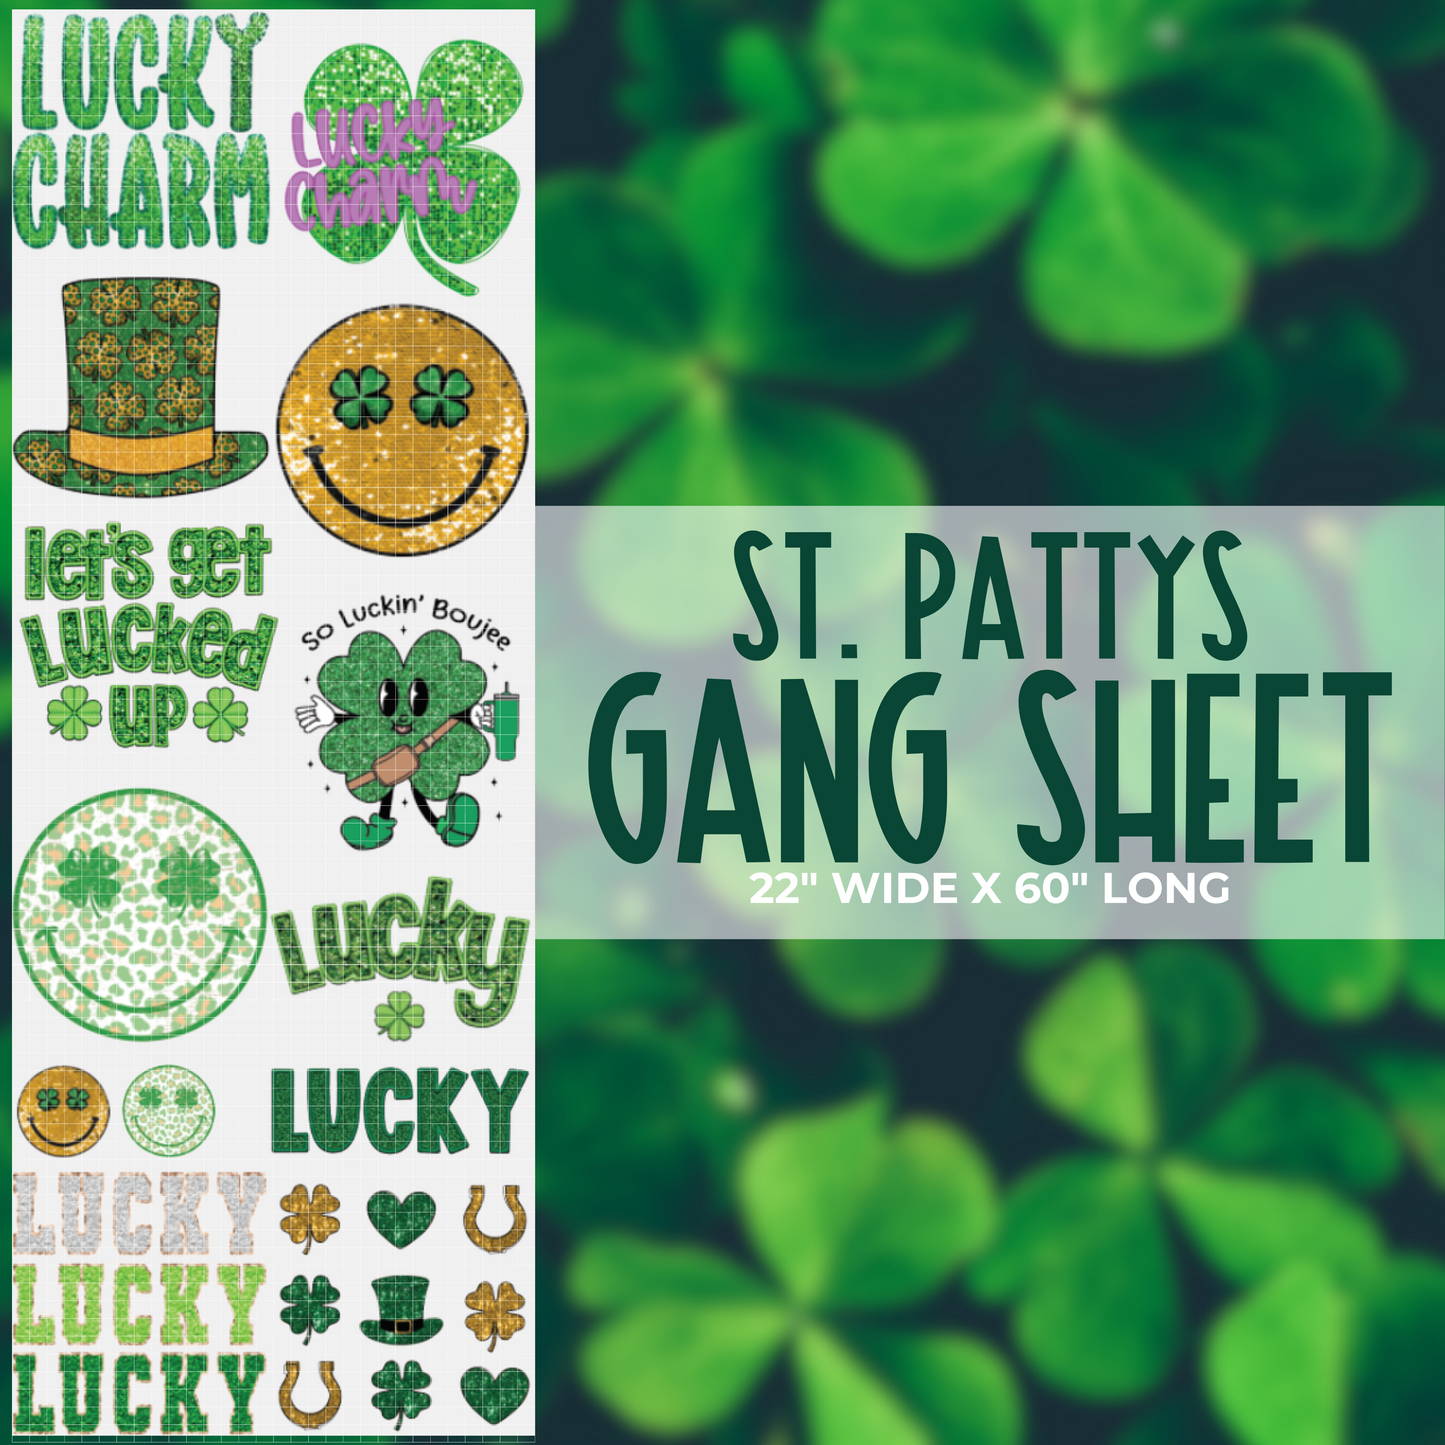 St. Pattys DTF Gang Sheet